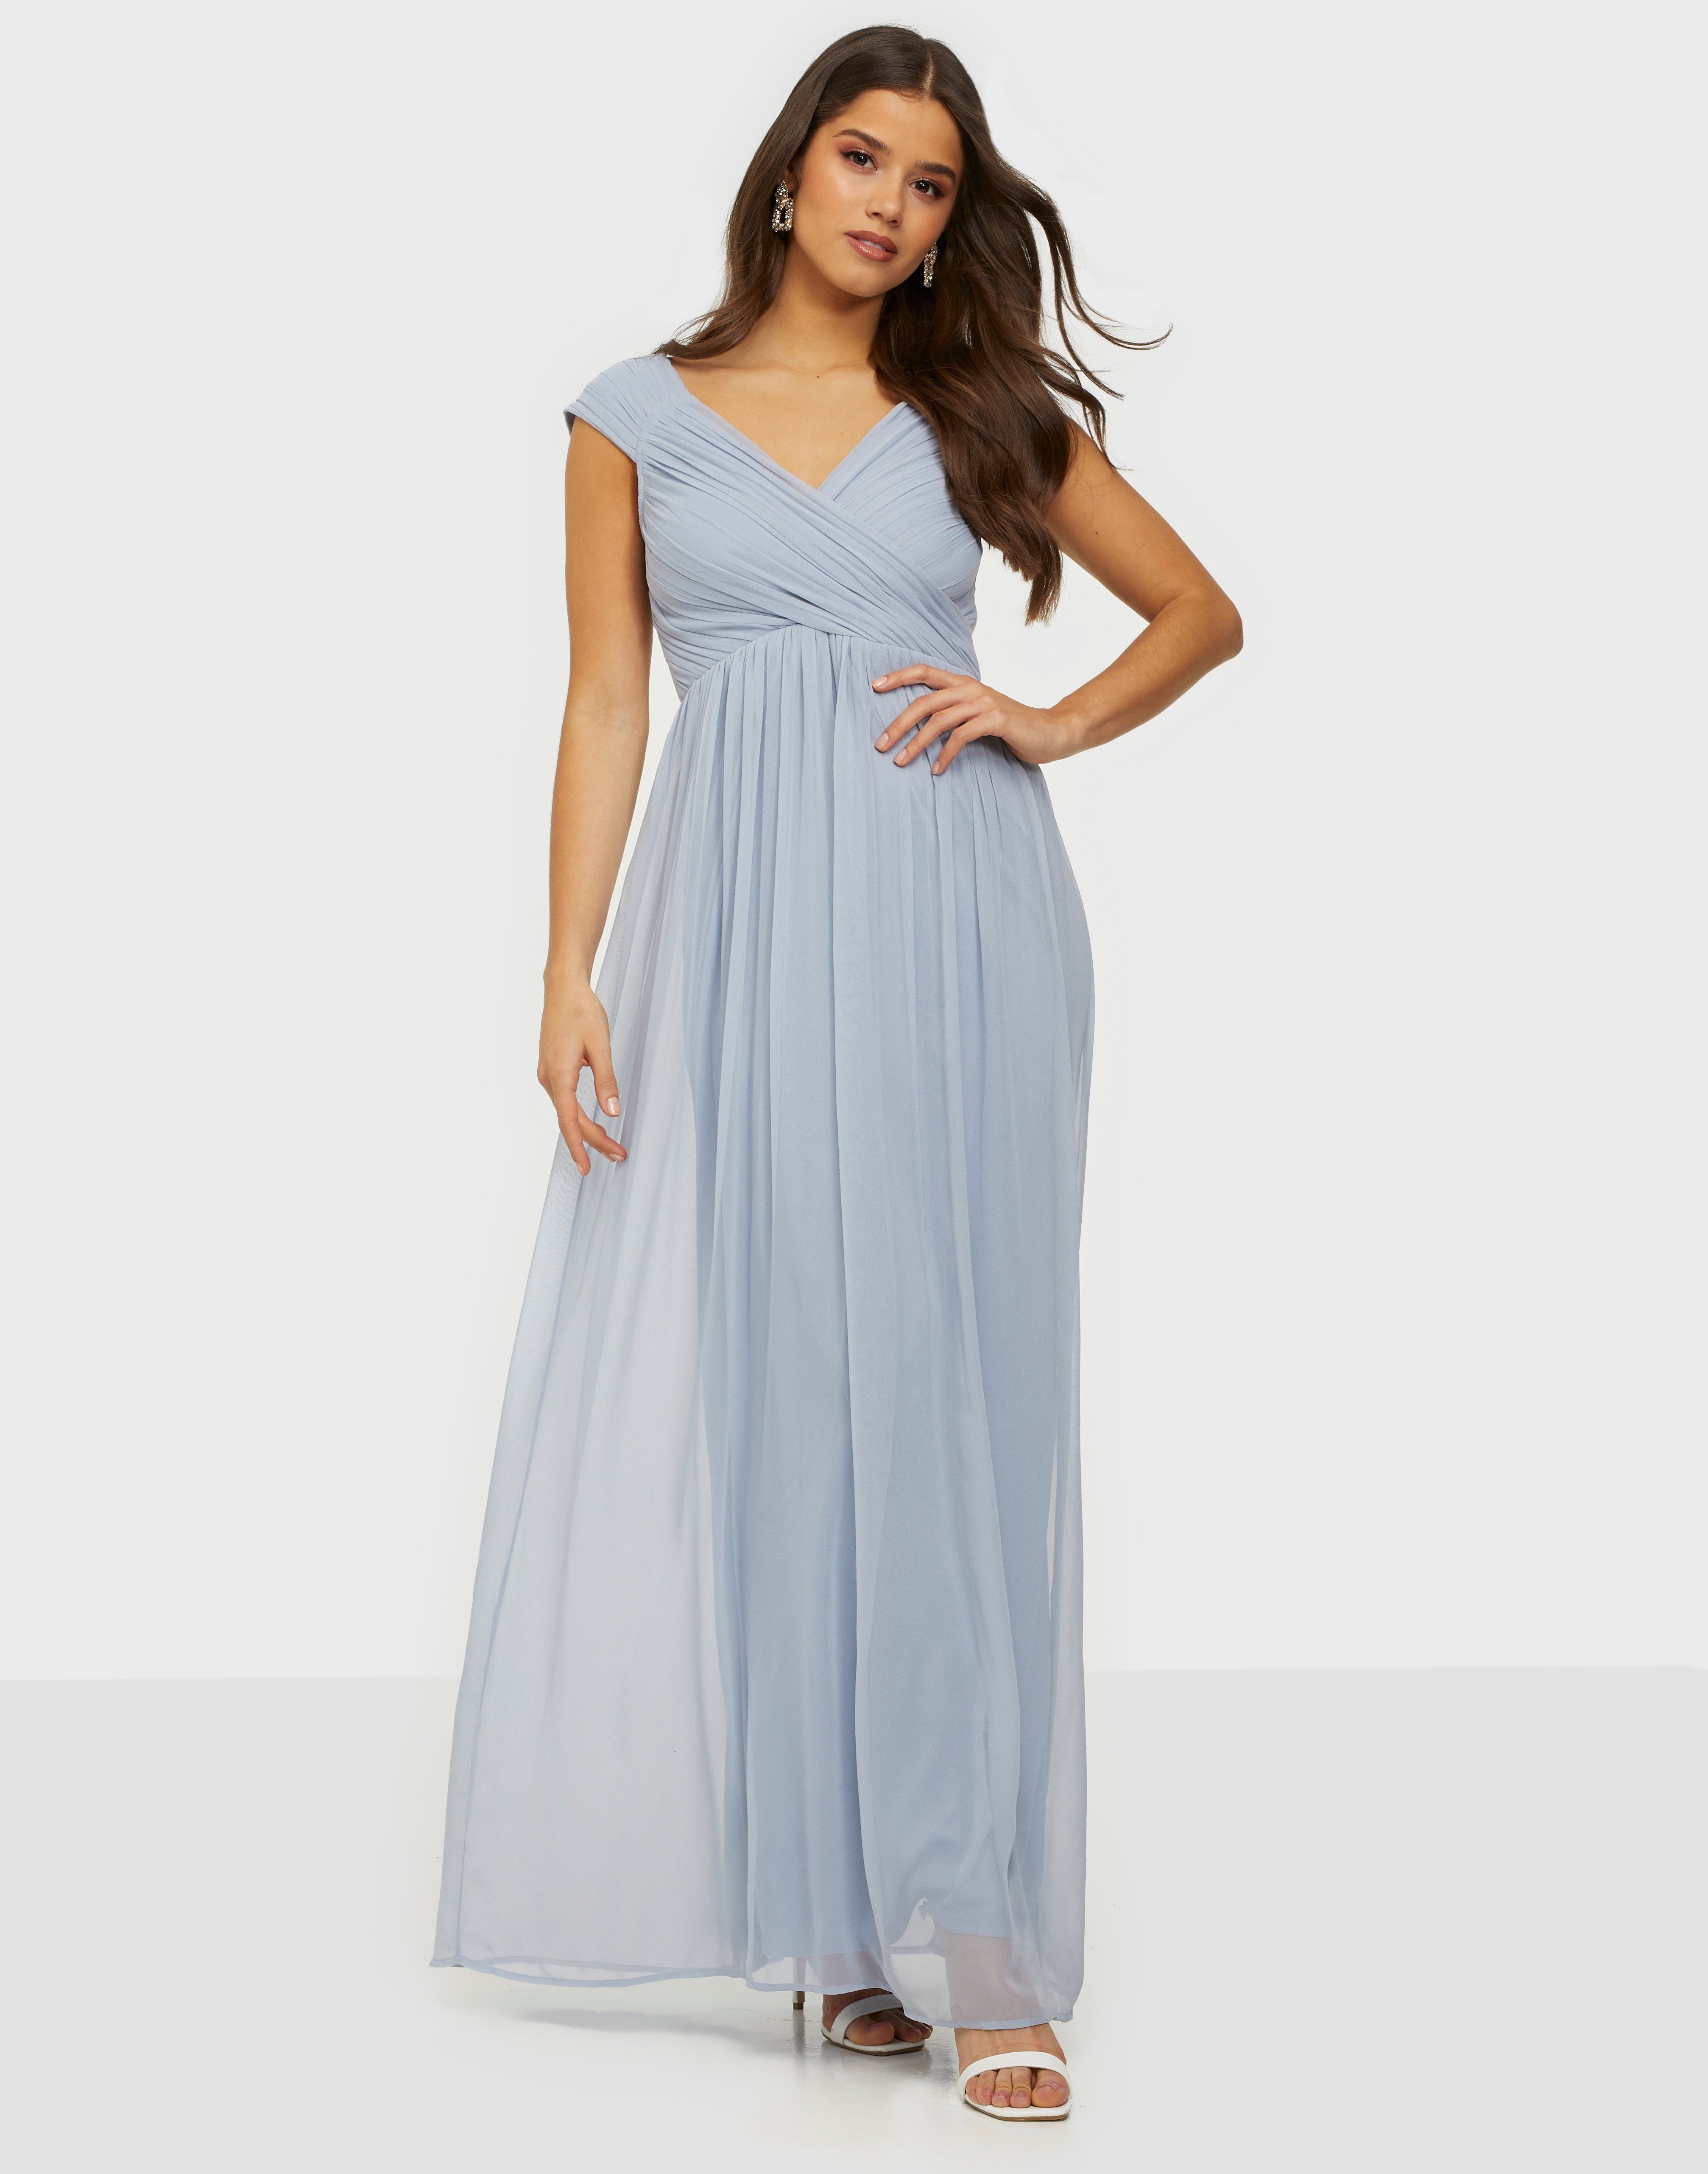 donna karan wedding dress price